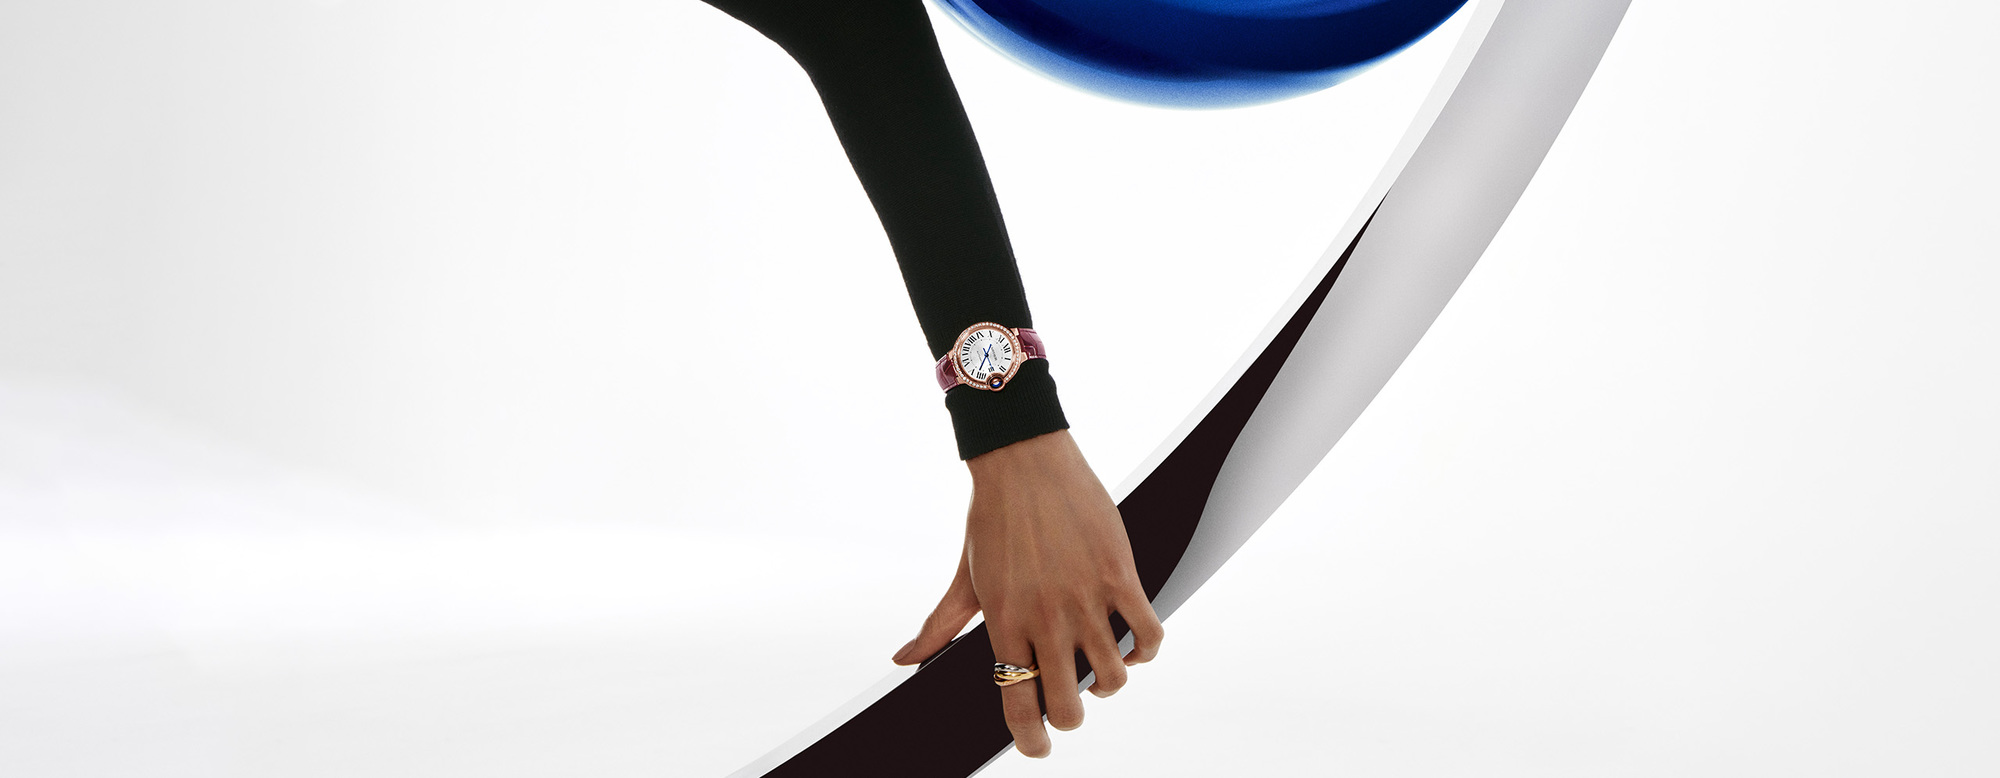 a lady’s outstretched arm wearing a Ballon Bleu de Cartier watch